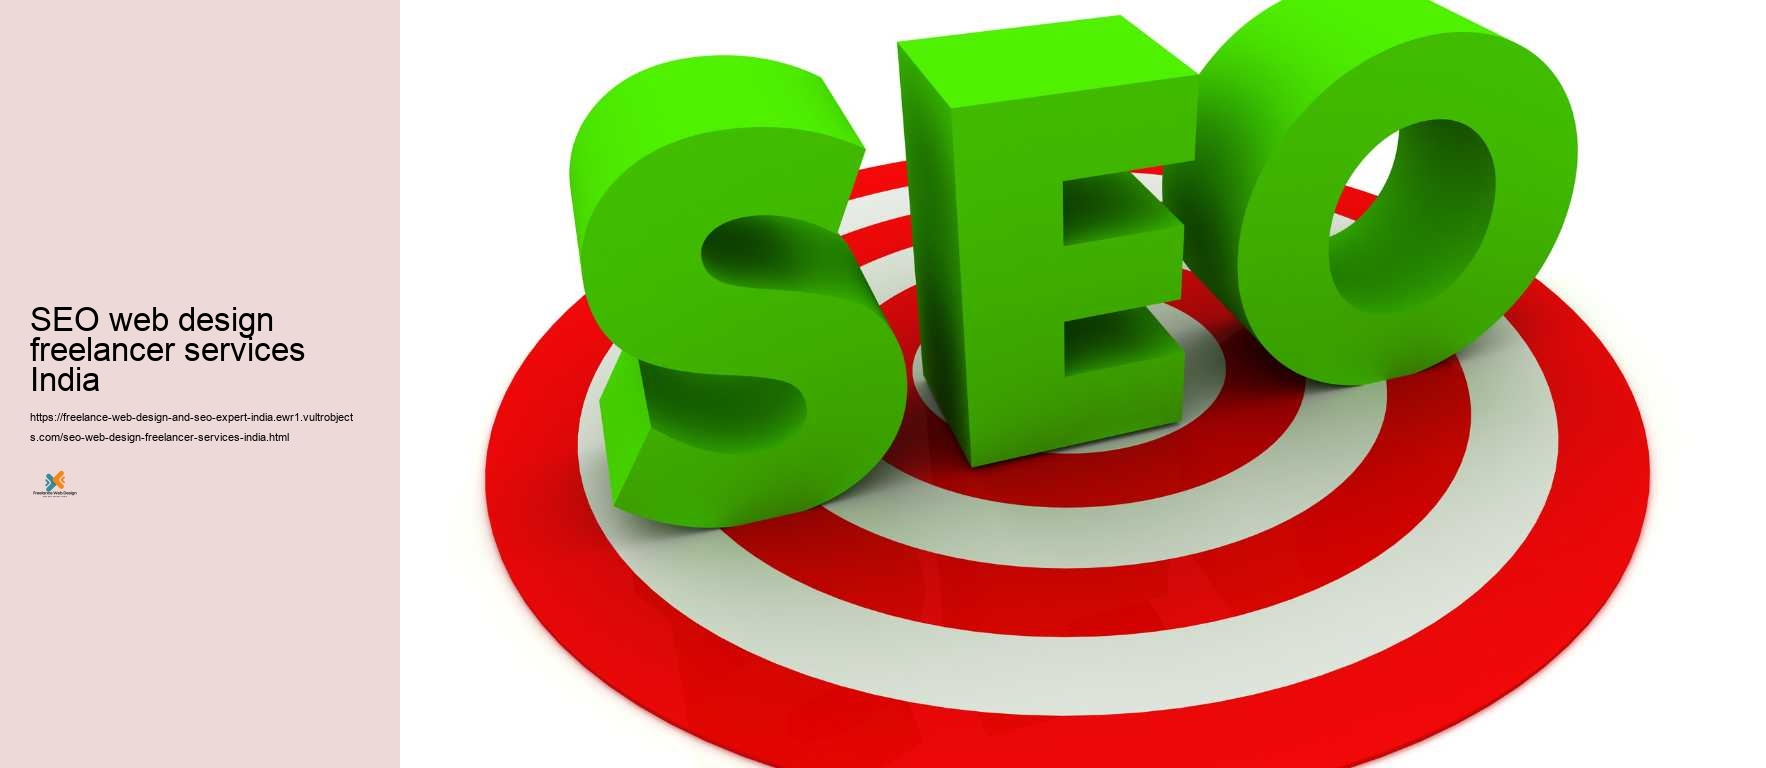 SEO web design freelancer services India